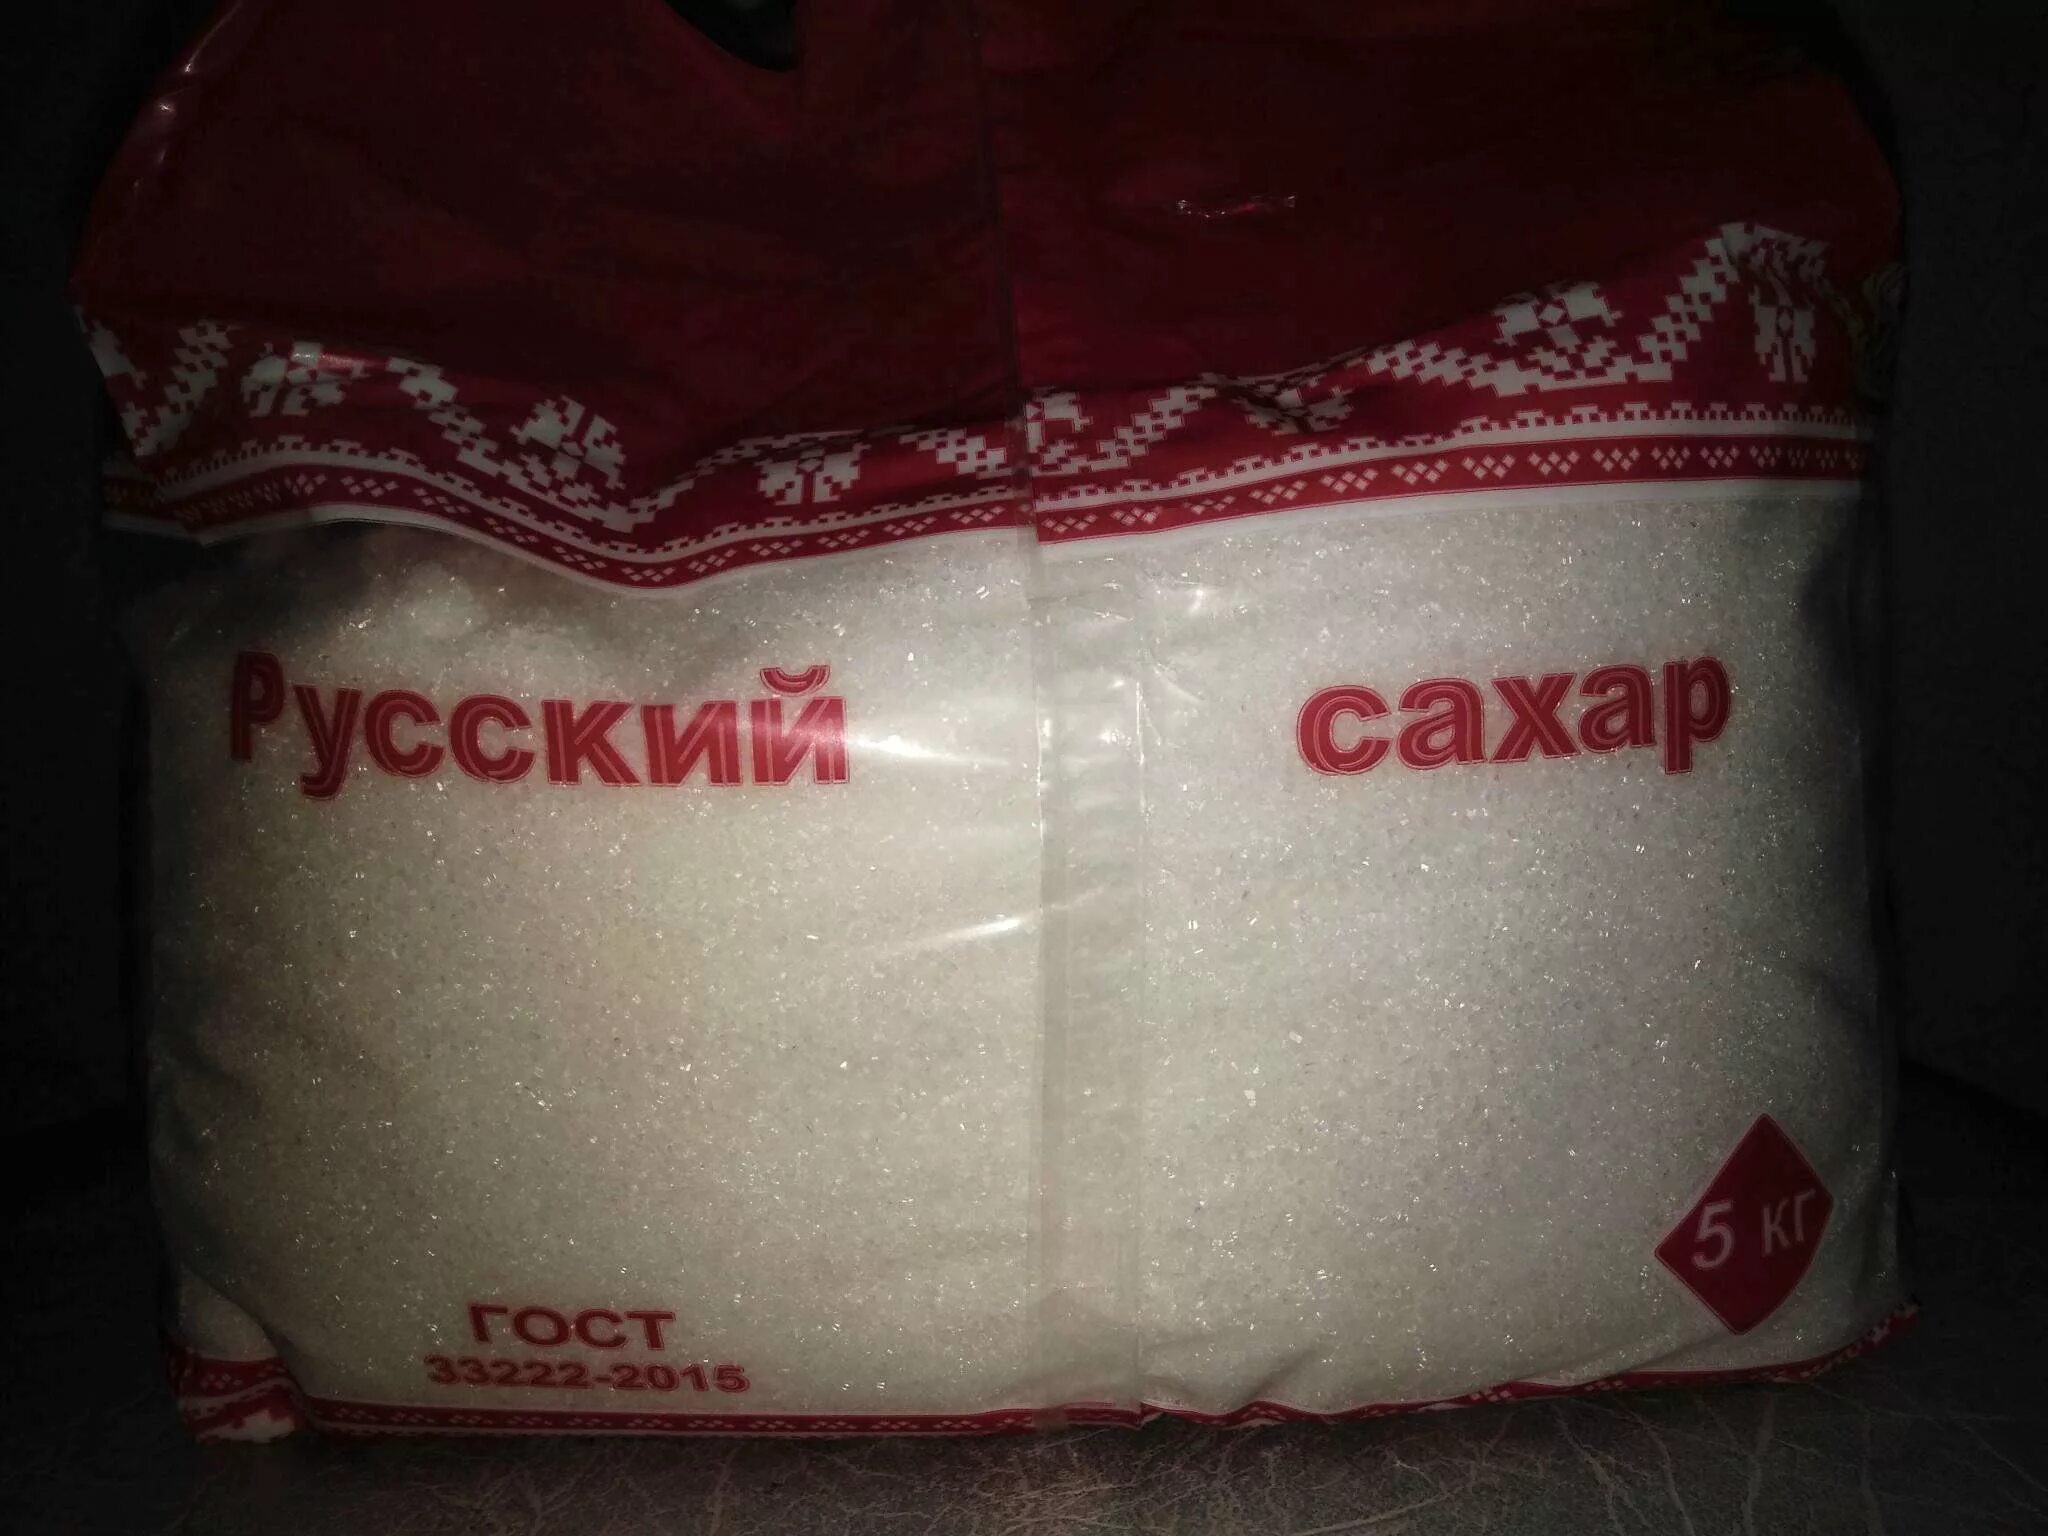 Сахар-песок русский сахар 5кг. Сахар песок русский 5кг. Русский сахар 5 кг. Сахар русский сахар 5 кг. Рязанский сахар год